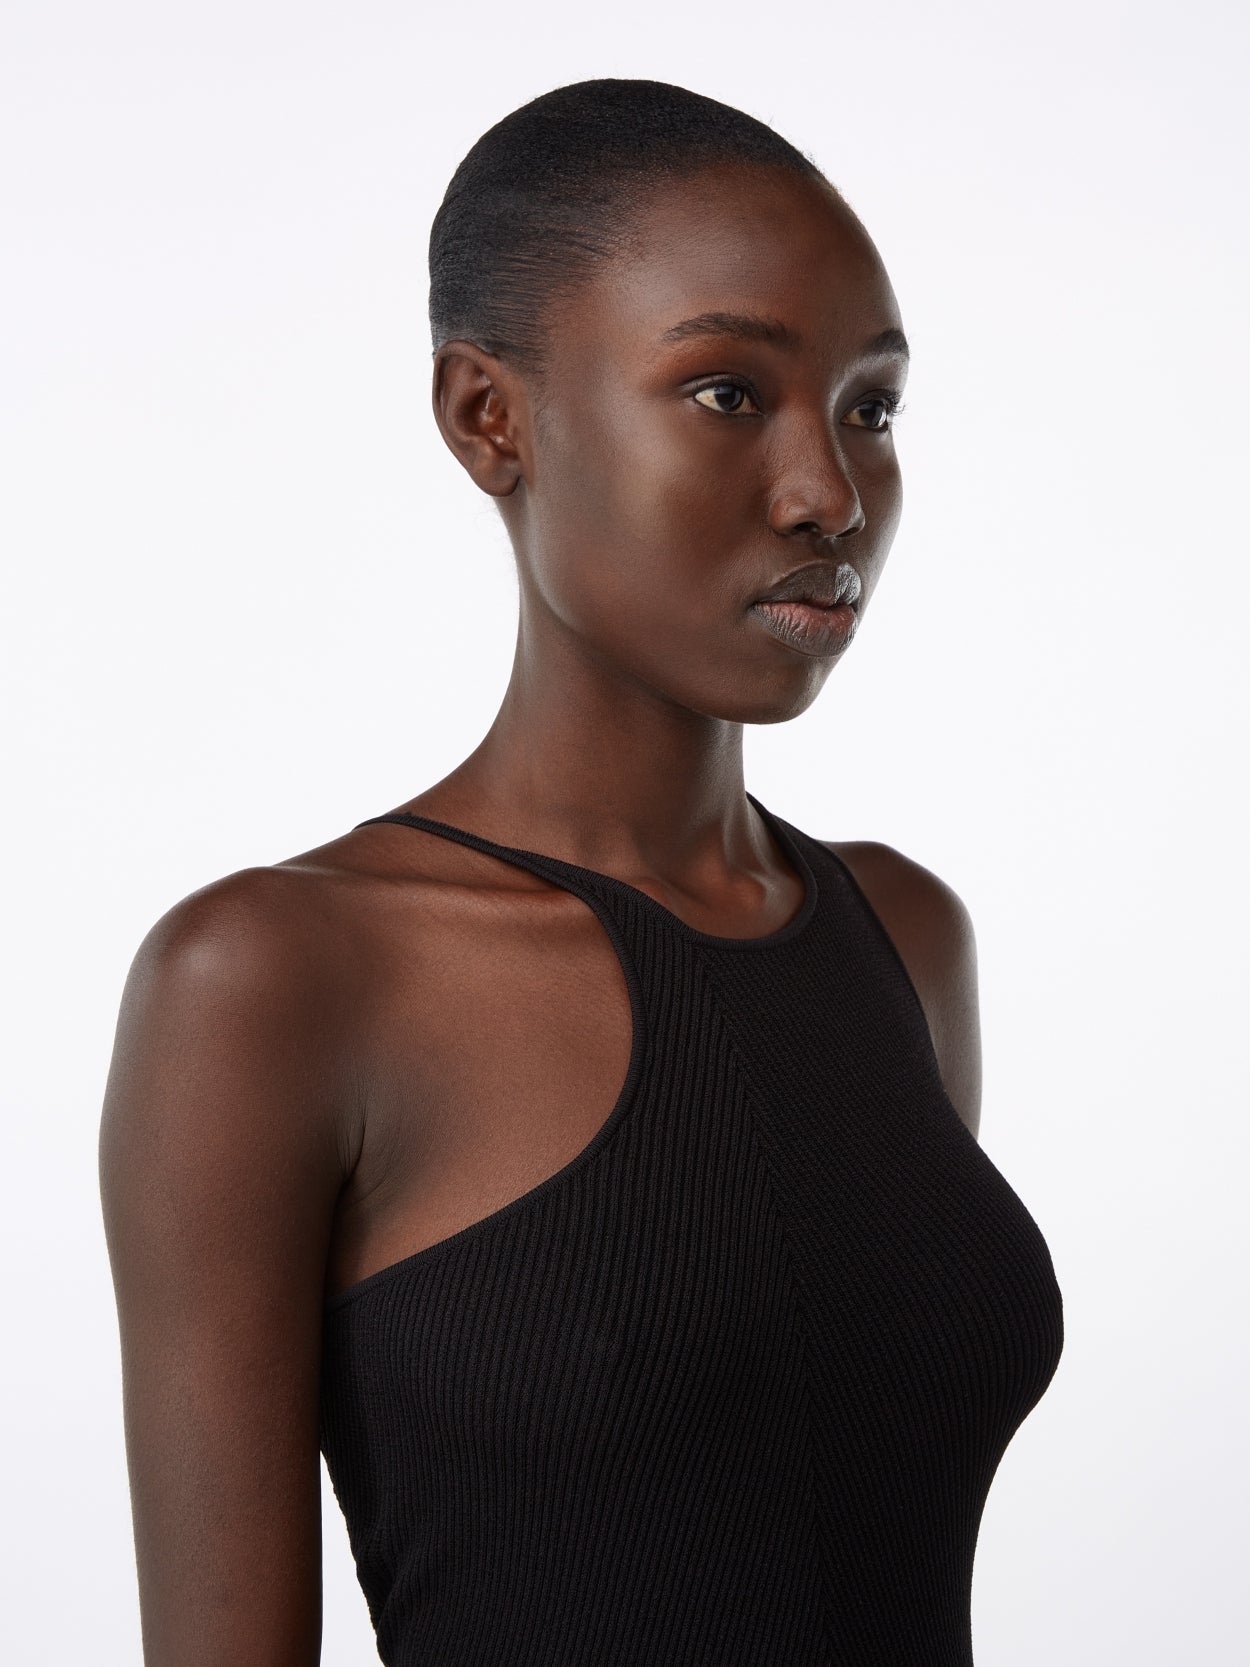 clsoe up of a model wearing a black knit jumpsuit